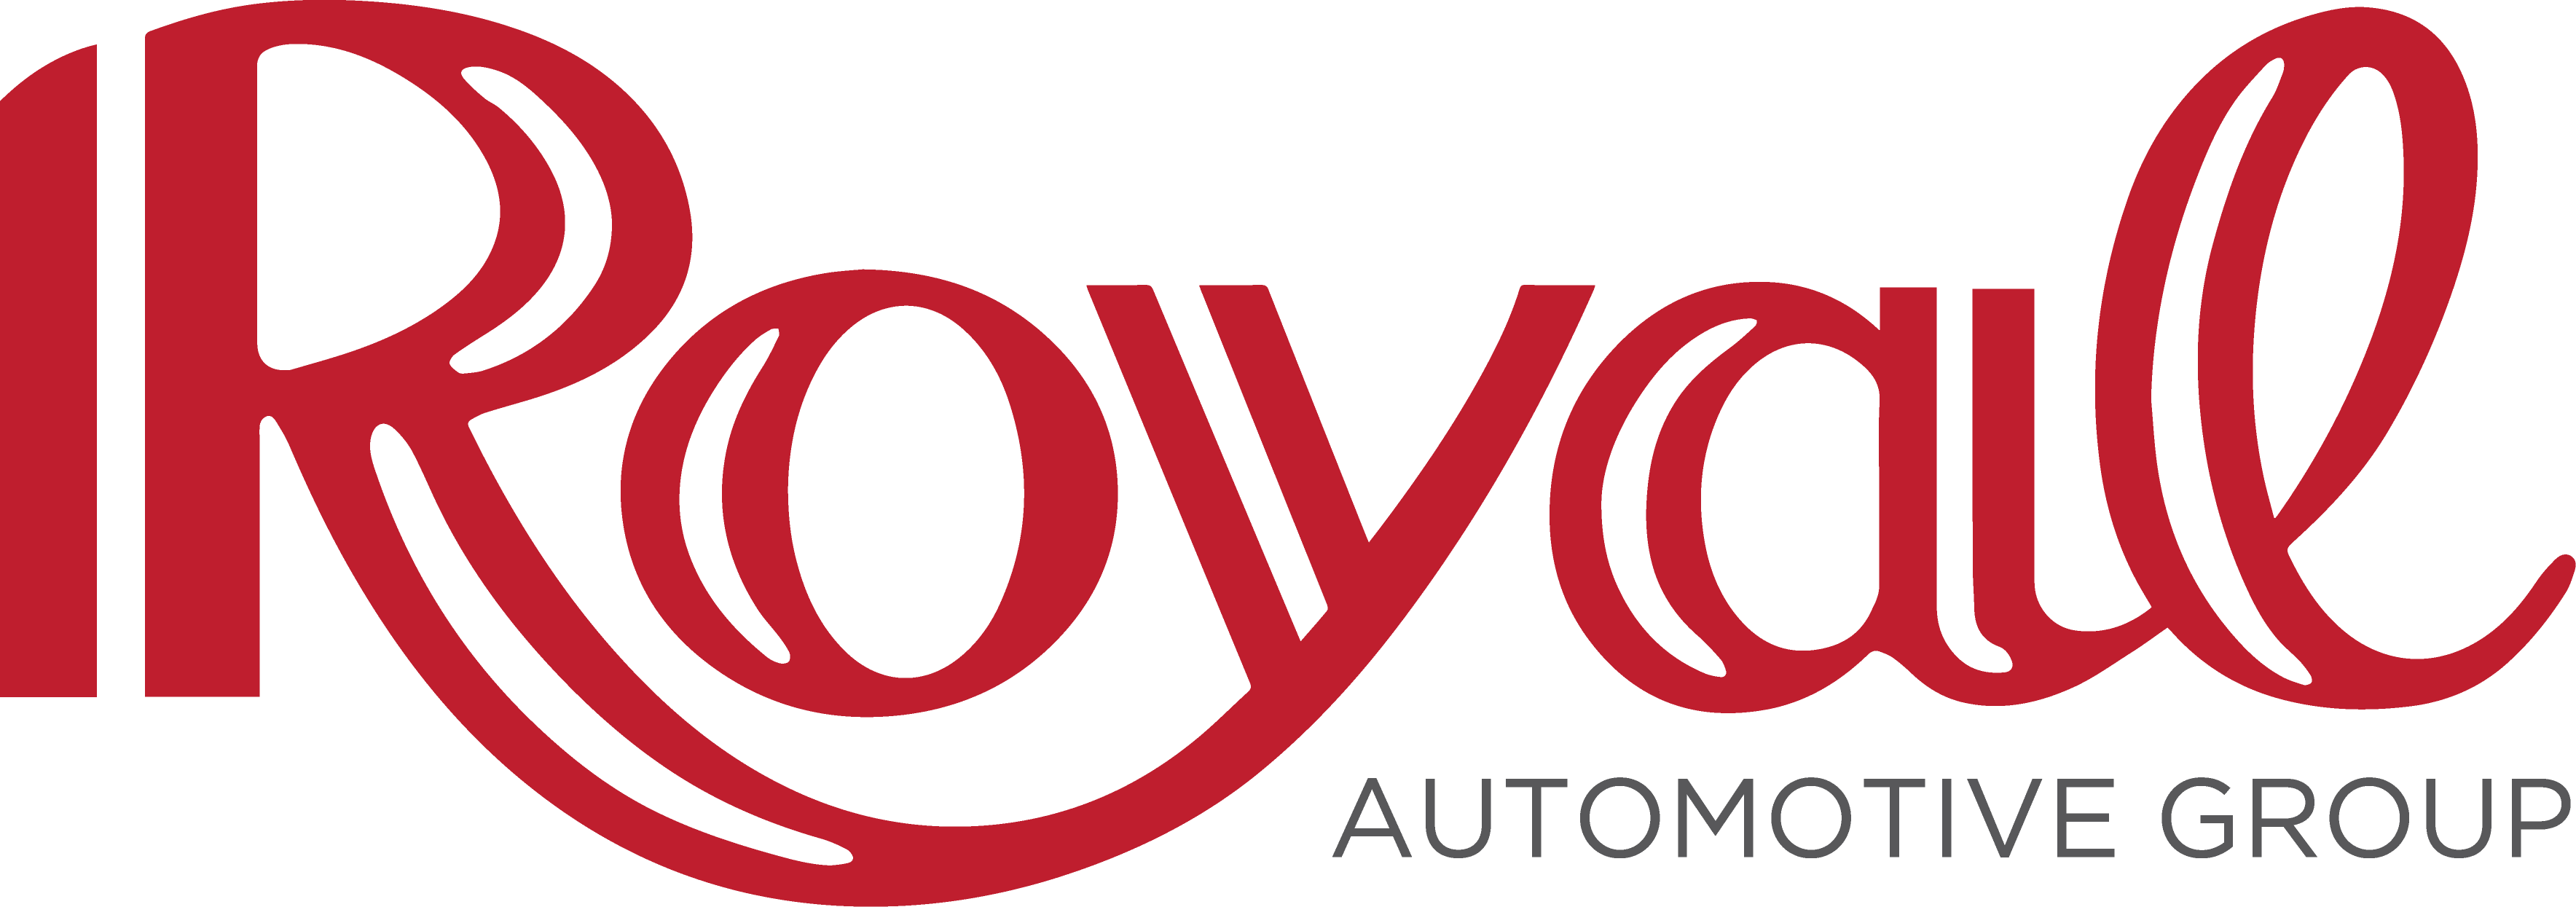 royal automotive logo